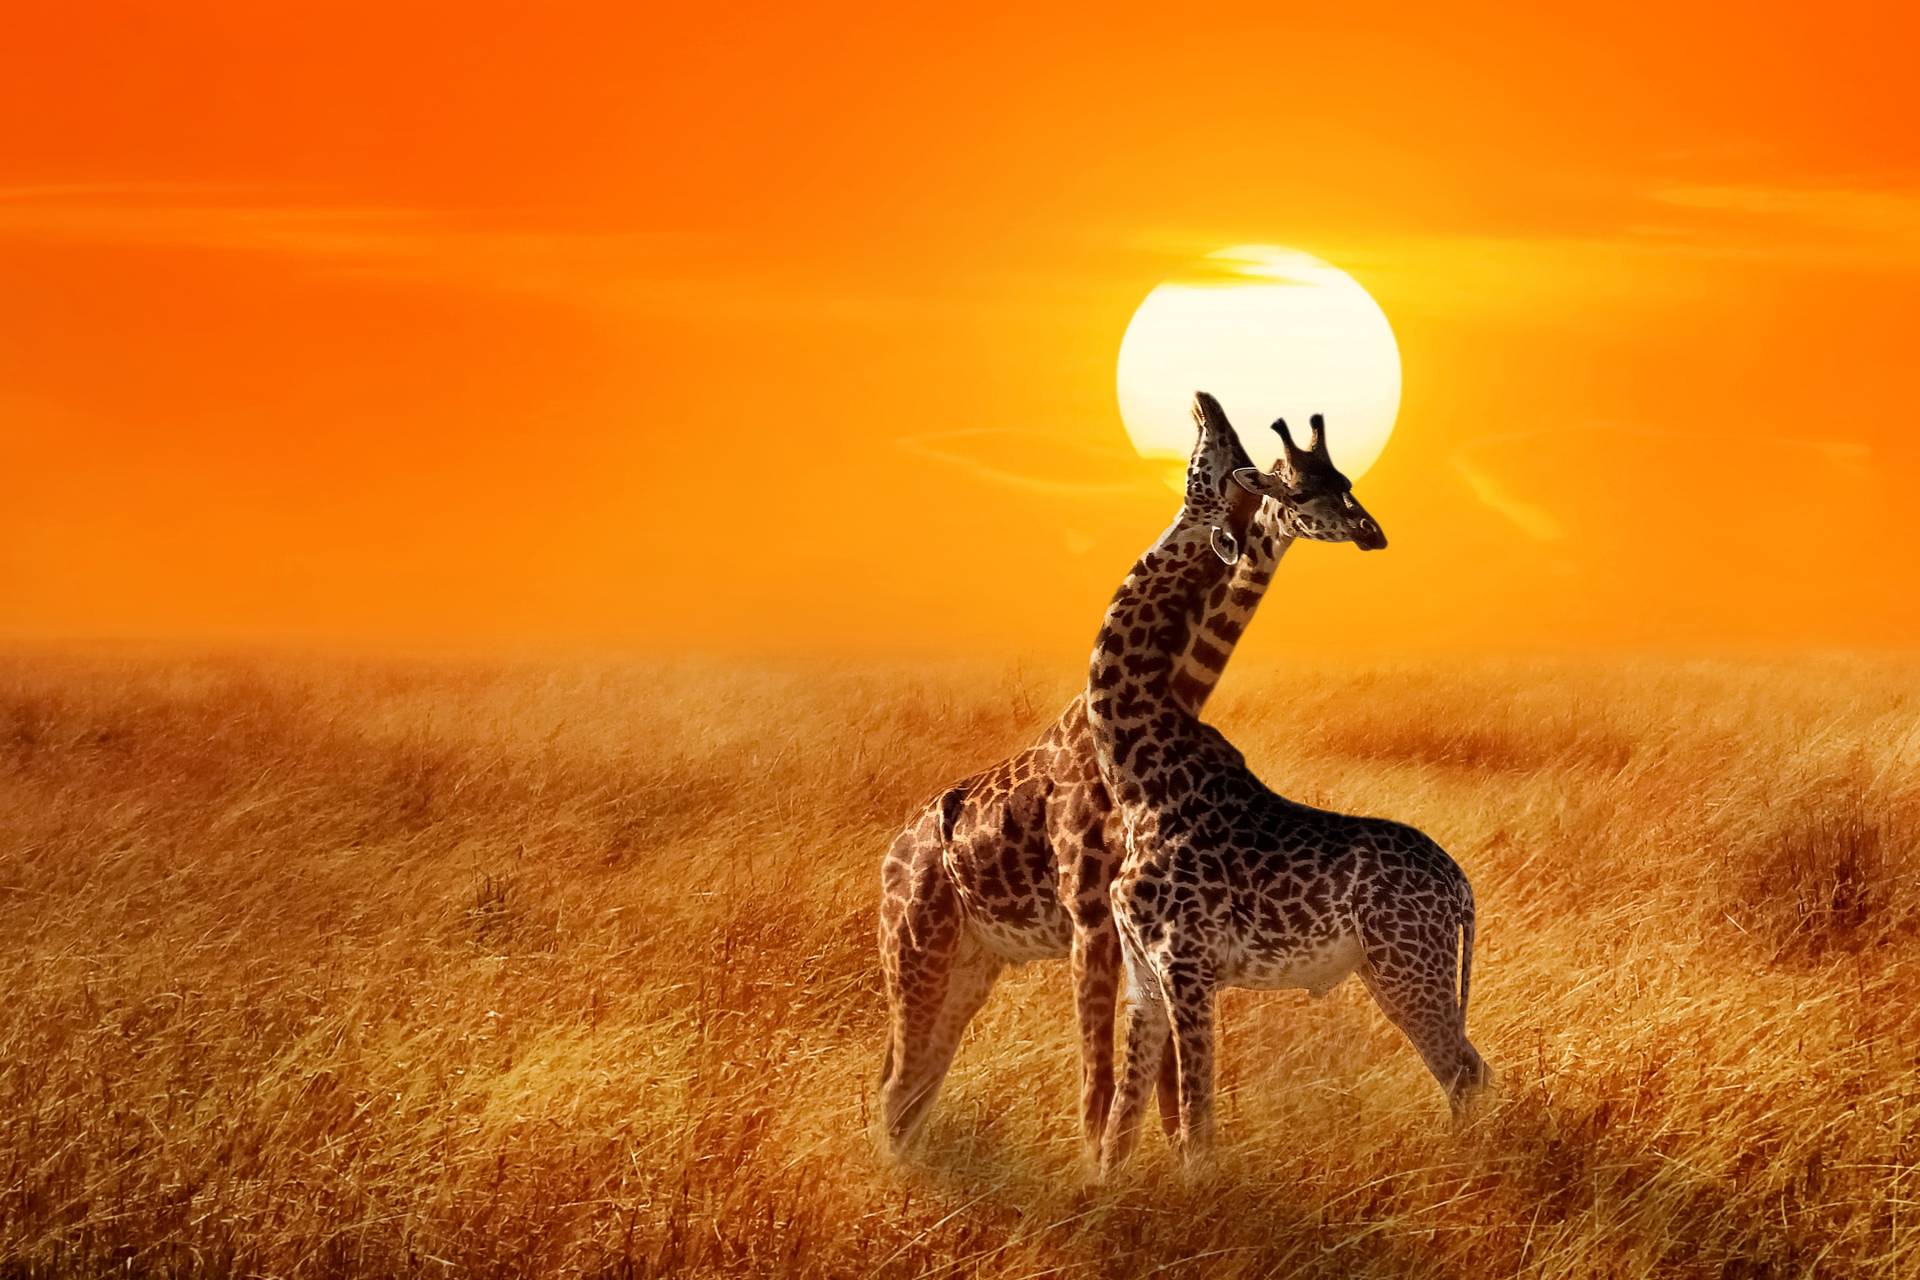 Papermoon Fototapete "Giraffes against Sunset" von Papermoon